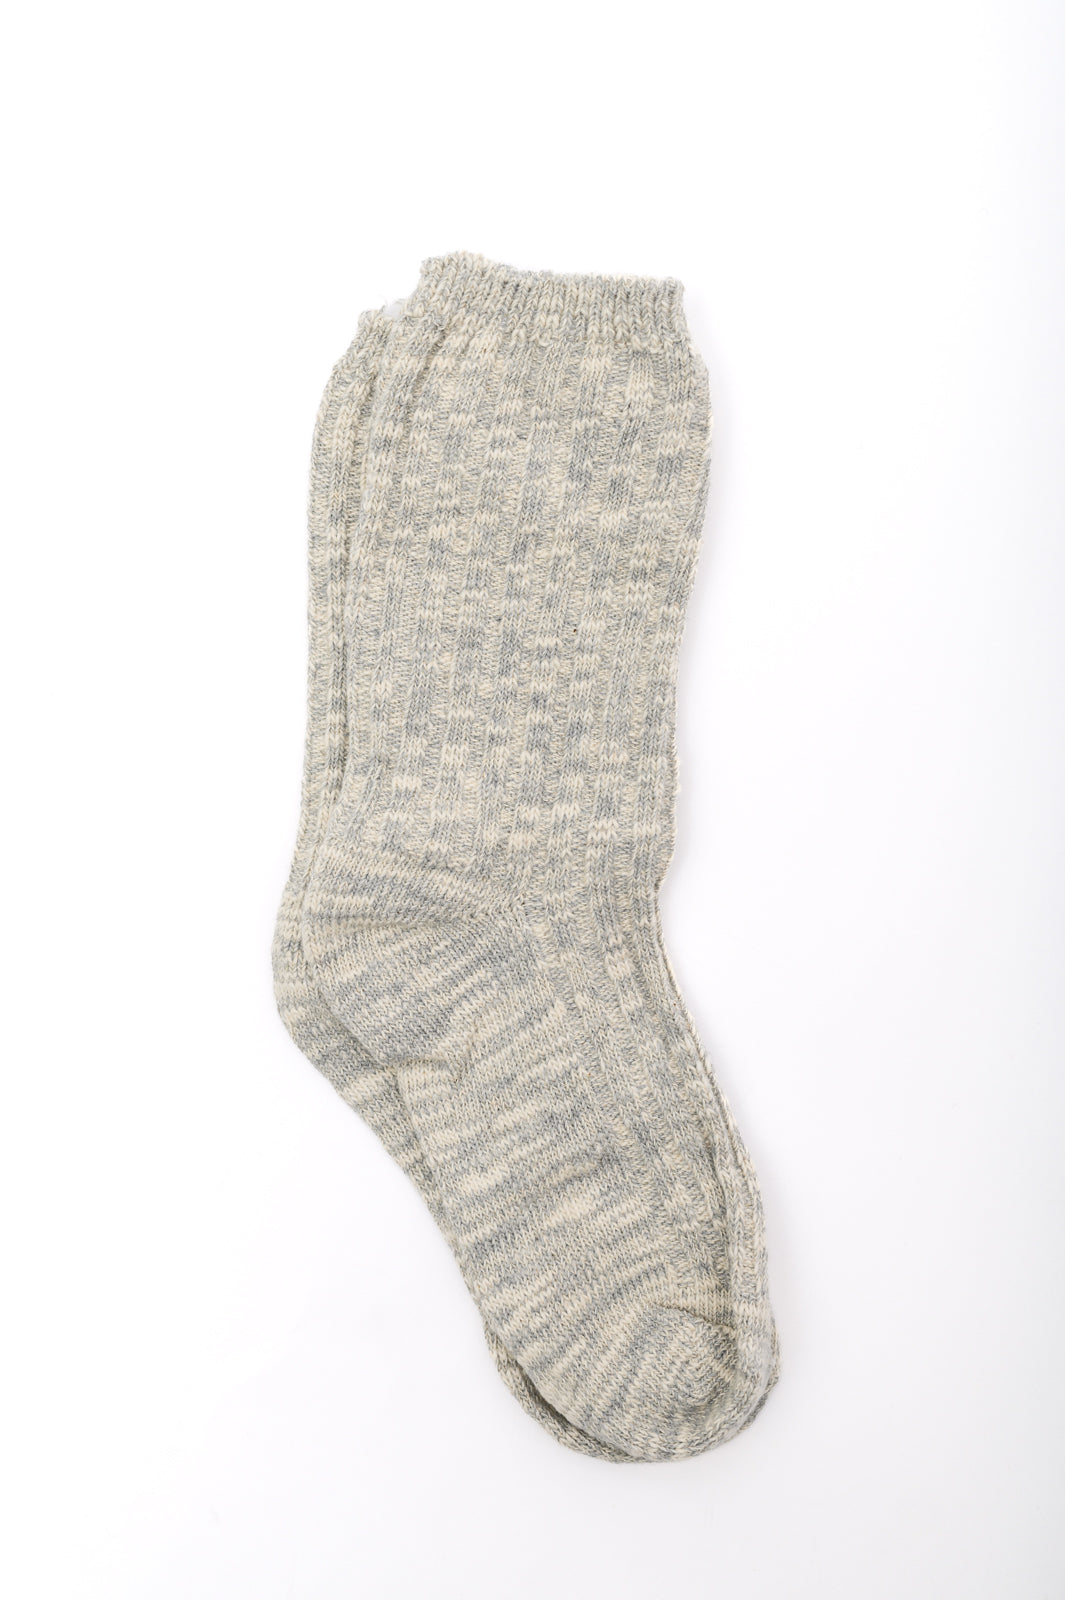 Sweet Socks Heathered Scrunch Socks - Atomic Wildflower